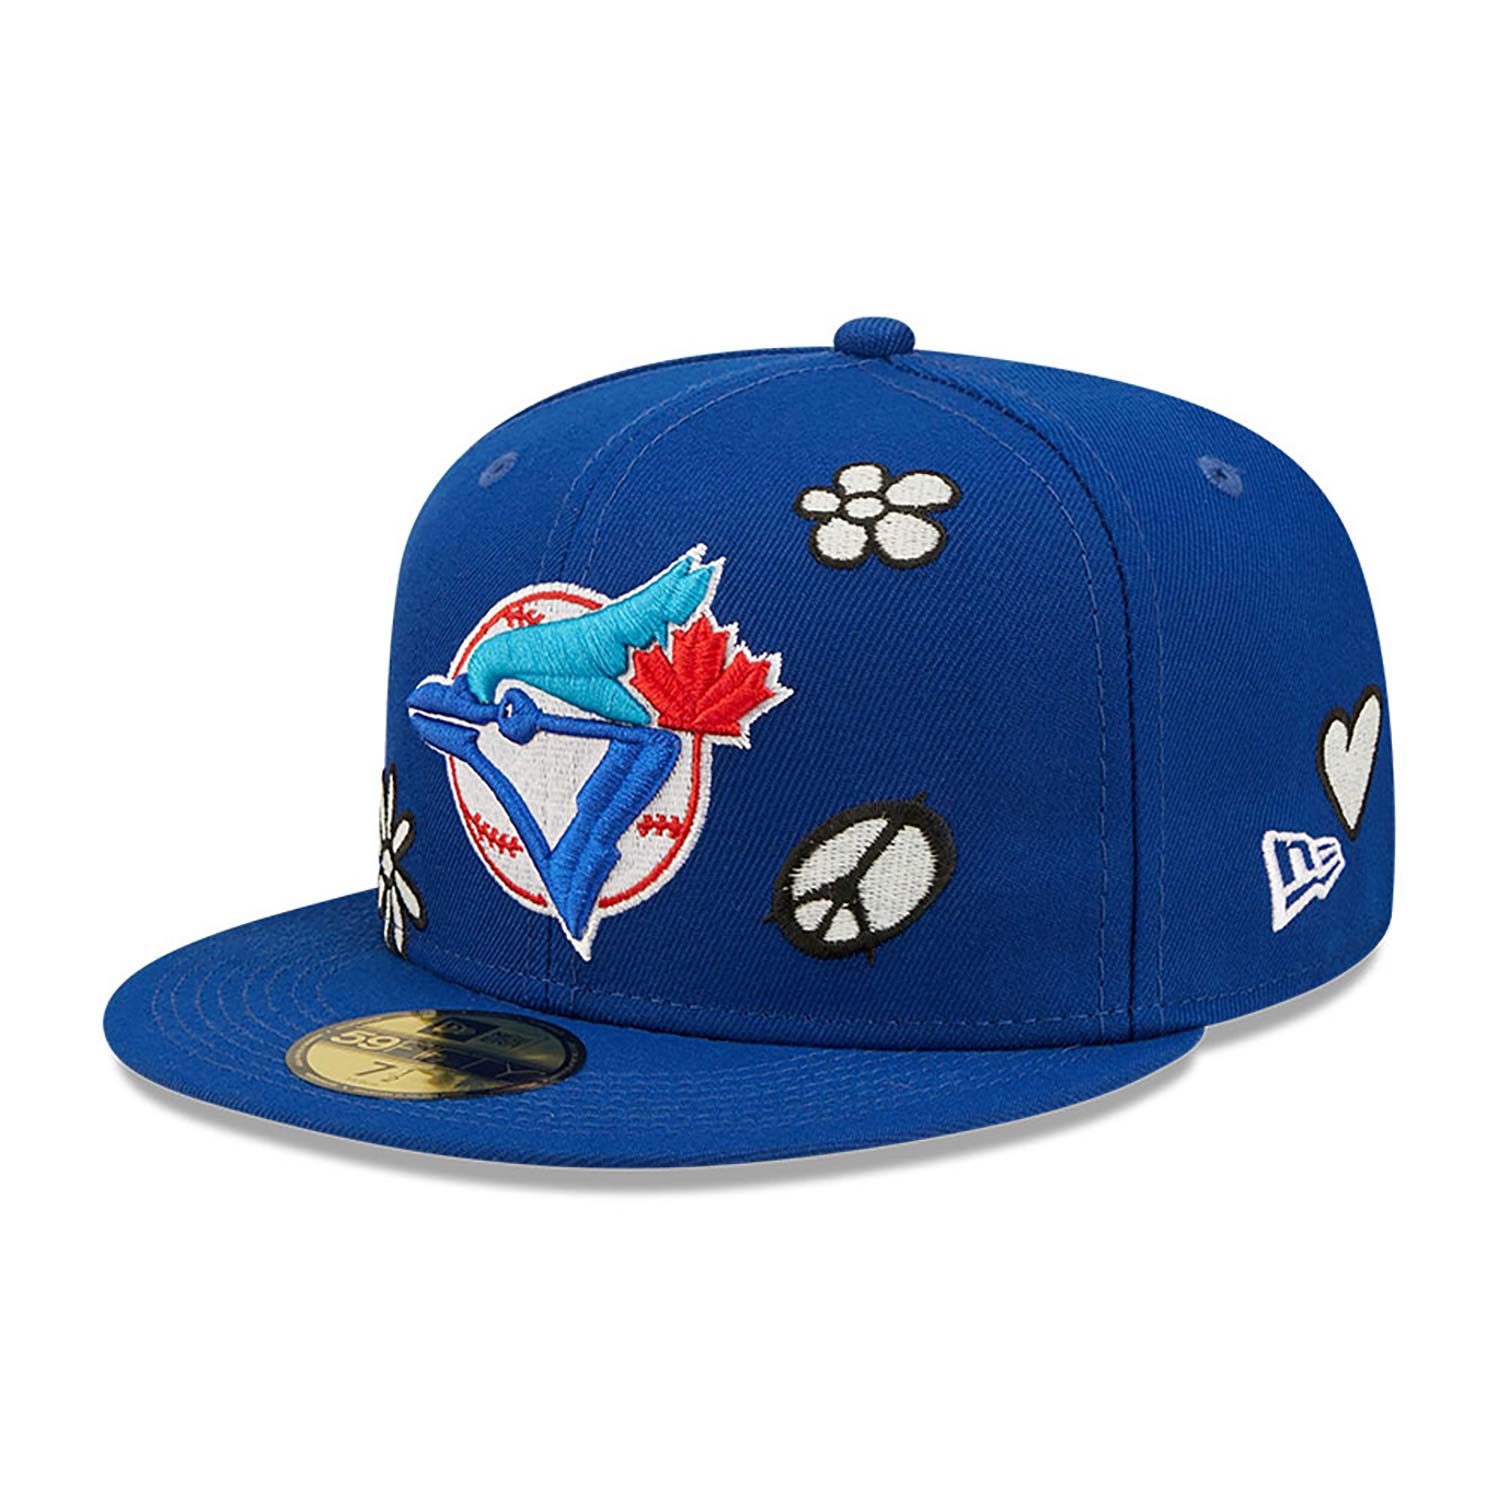 Toronto Blue Jays MLB Sunlight Pop Turquoise 59FIFTY Cap